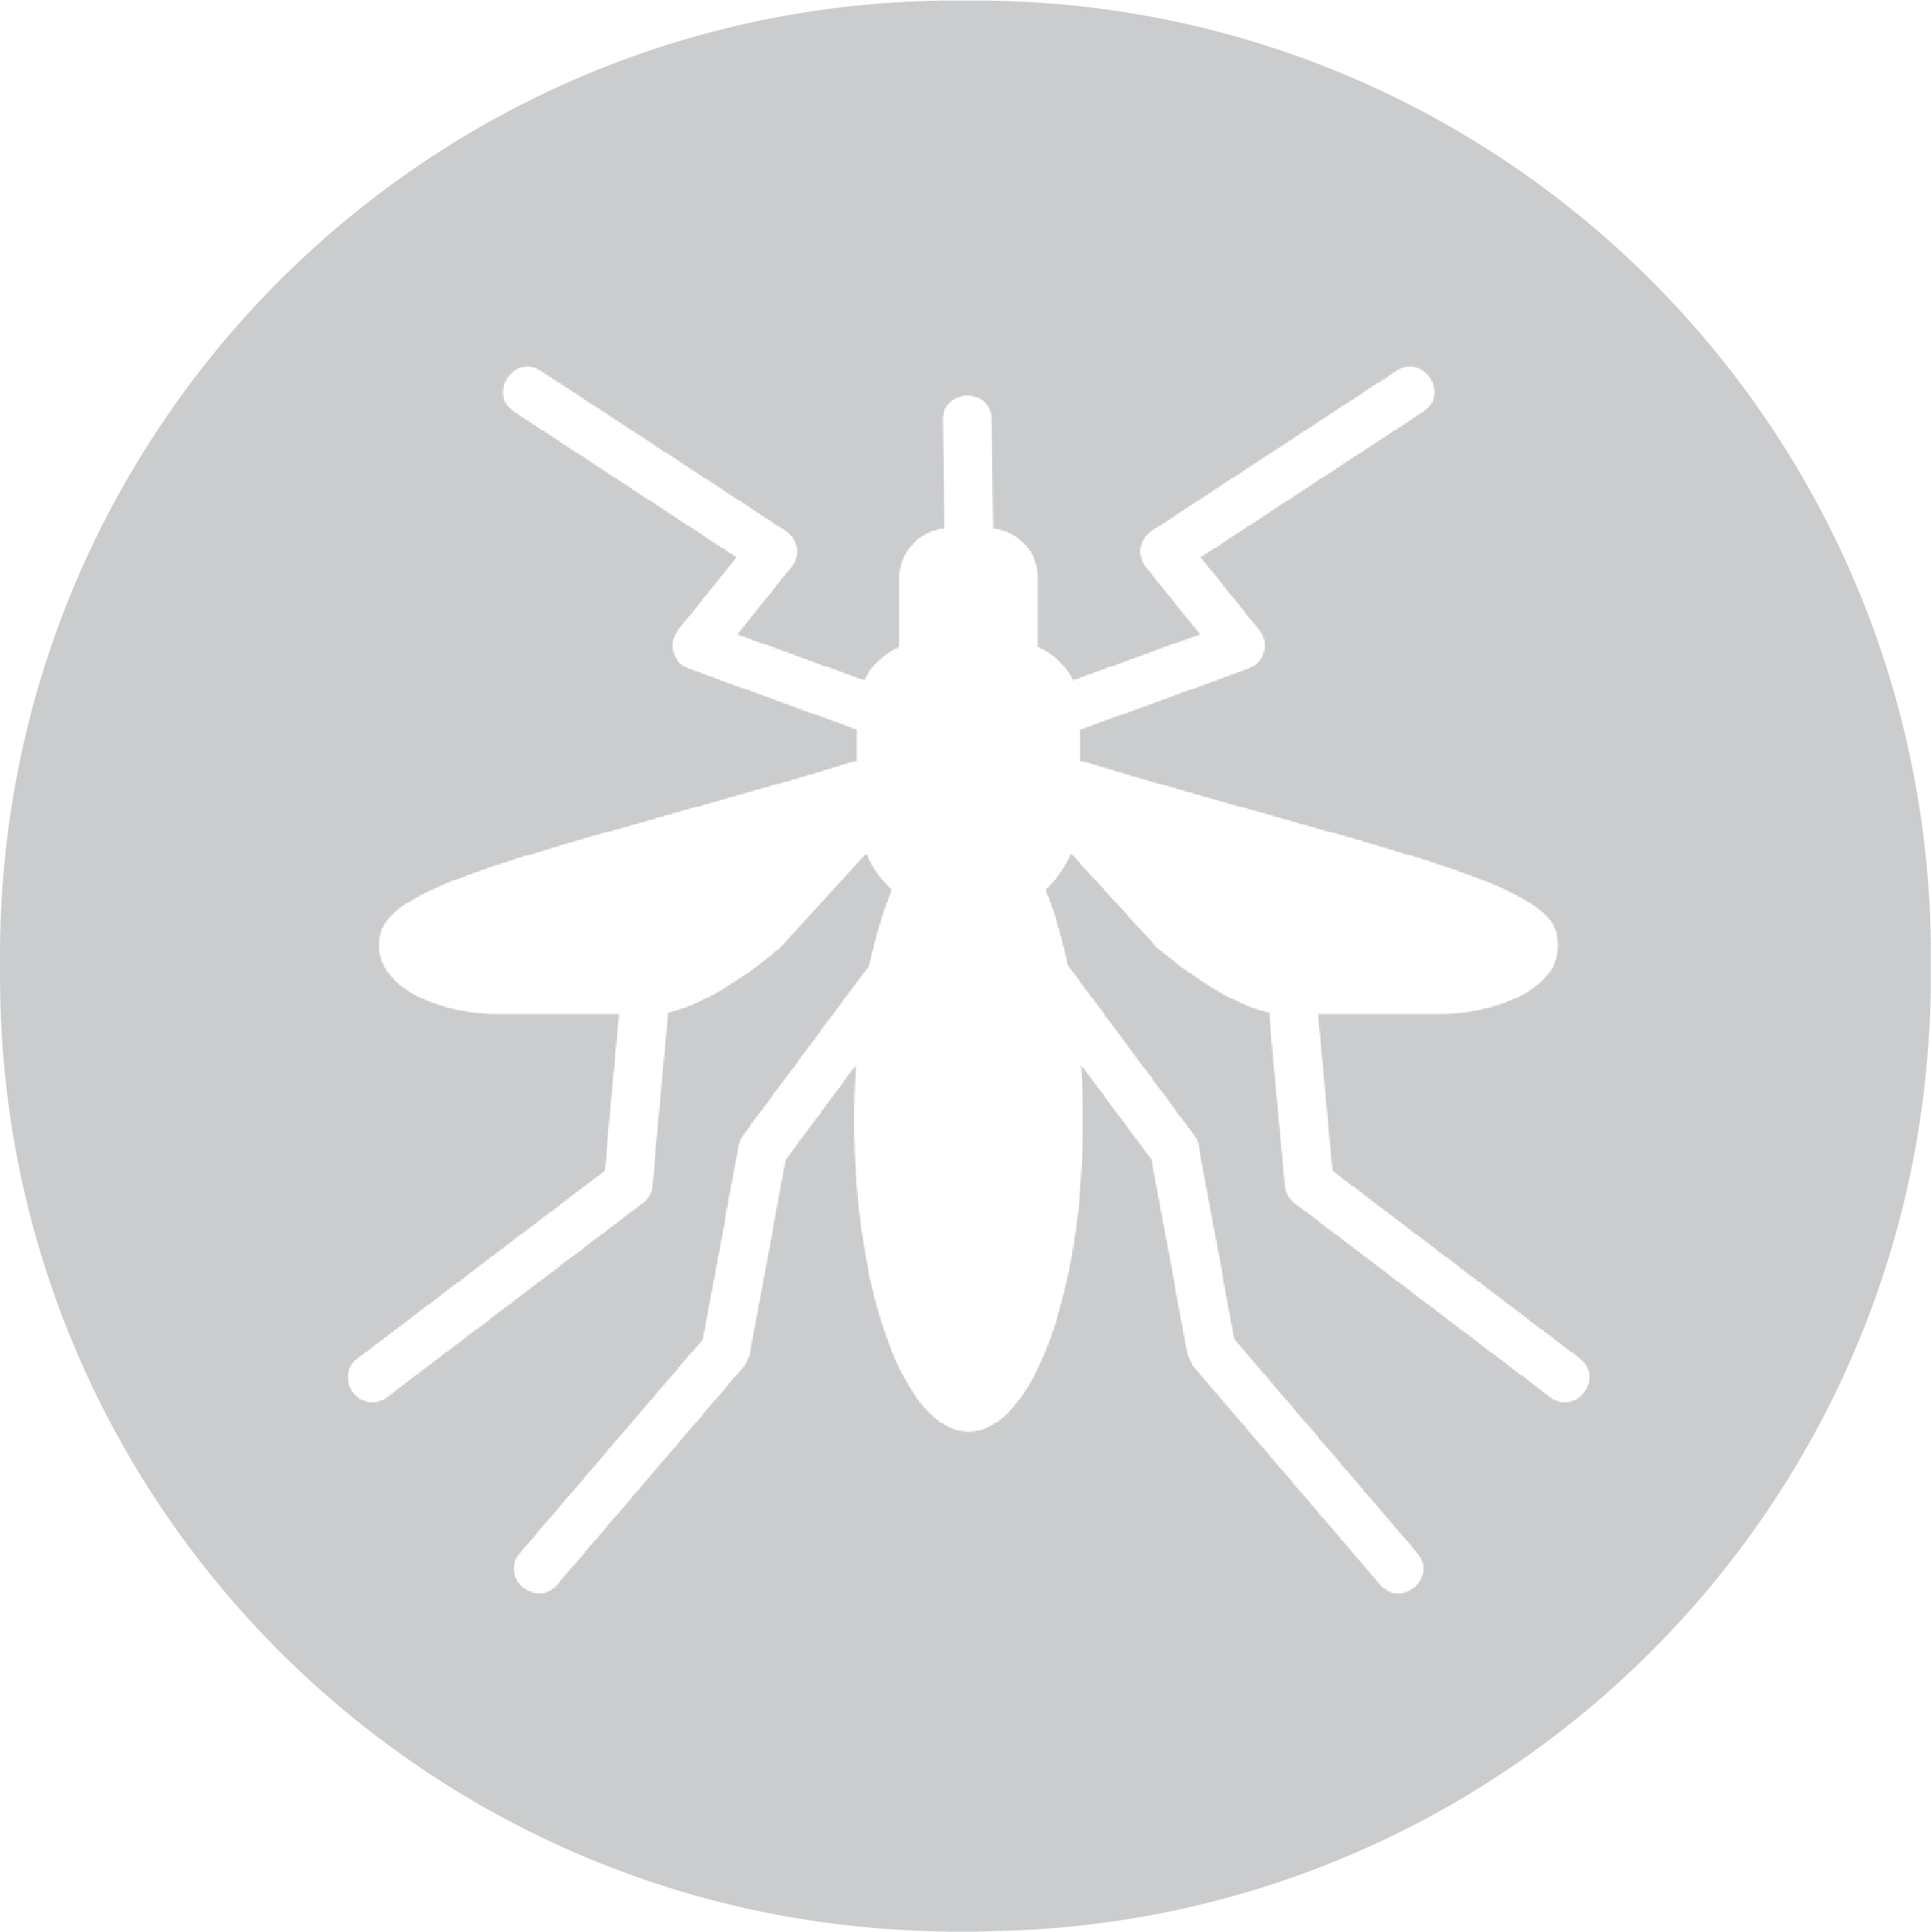 Navigation icon with a mosquito representing vector-borne illnesses